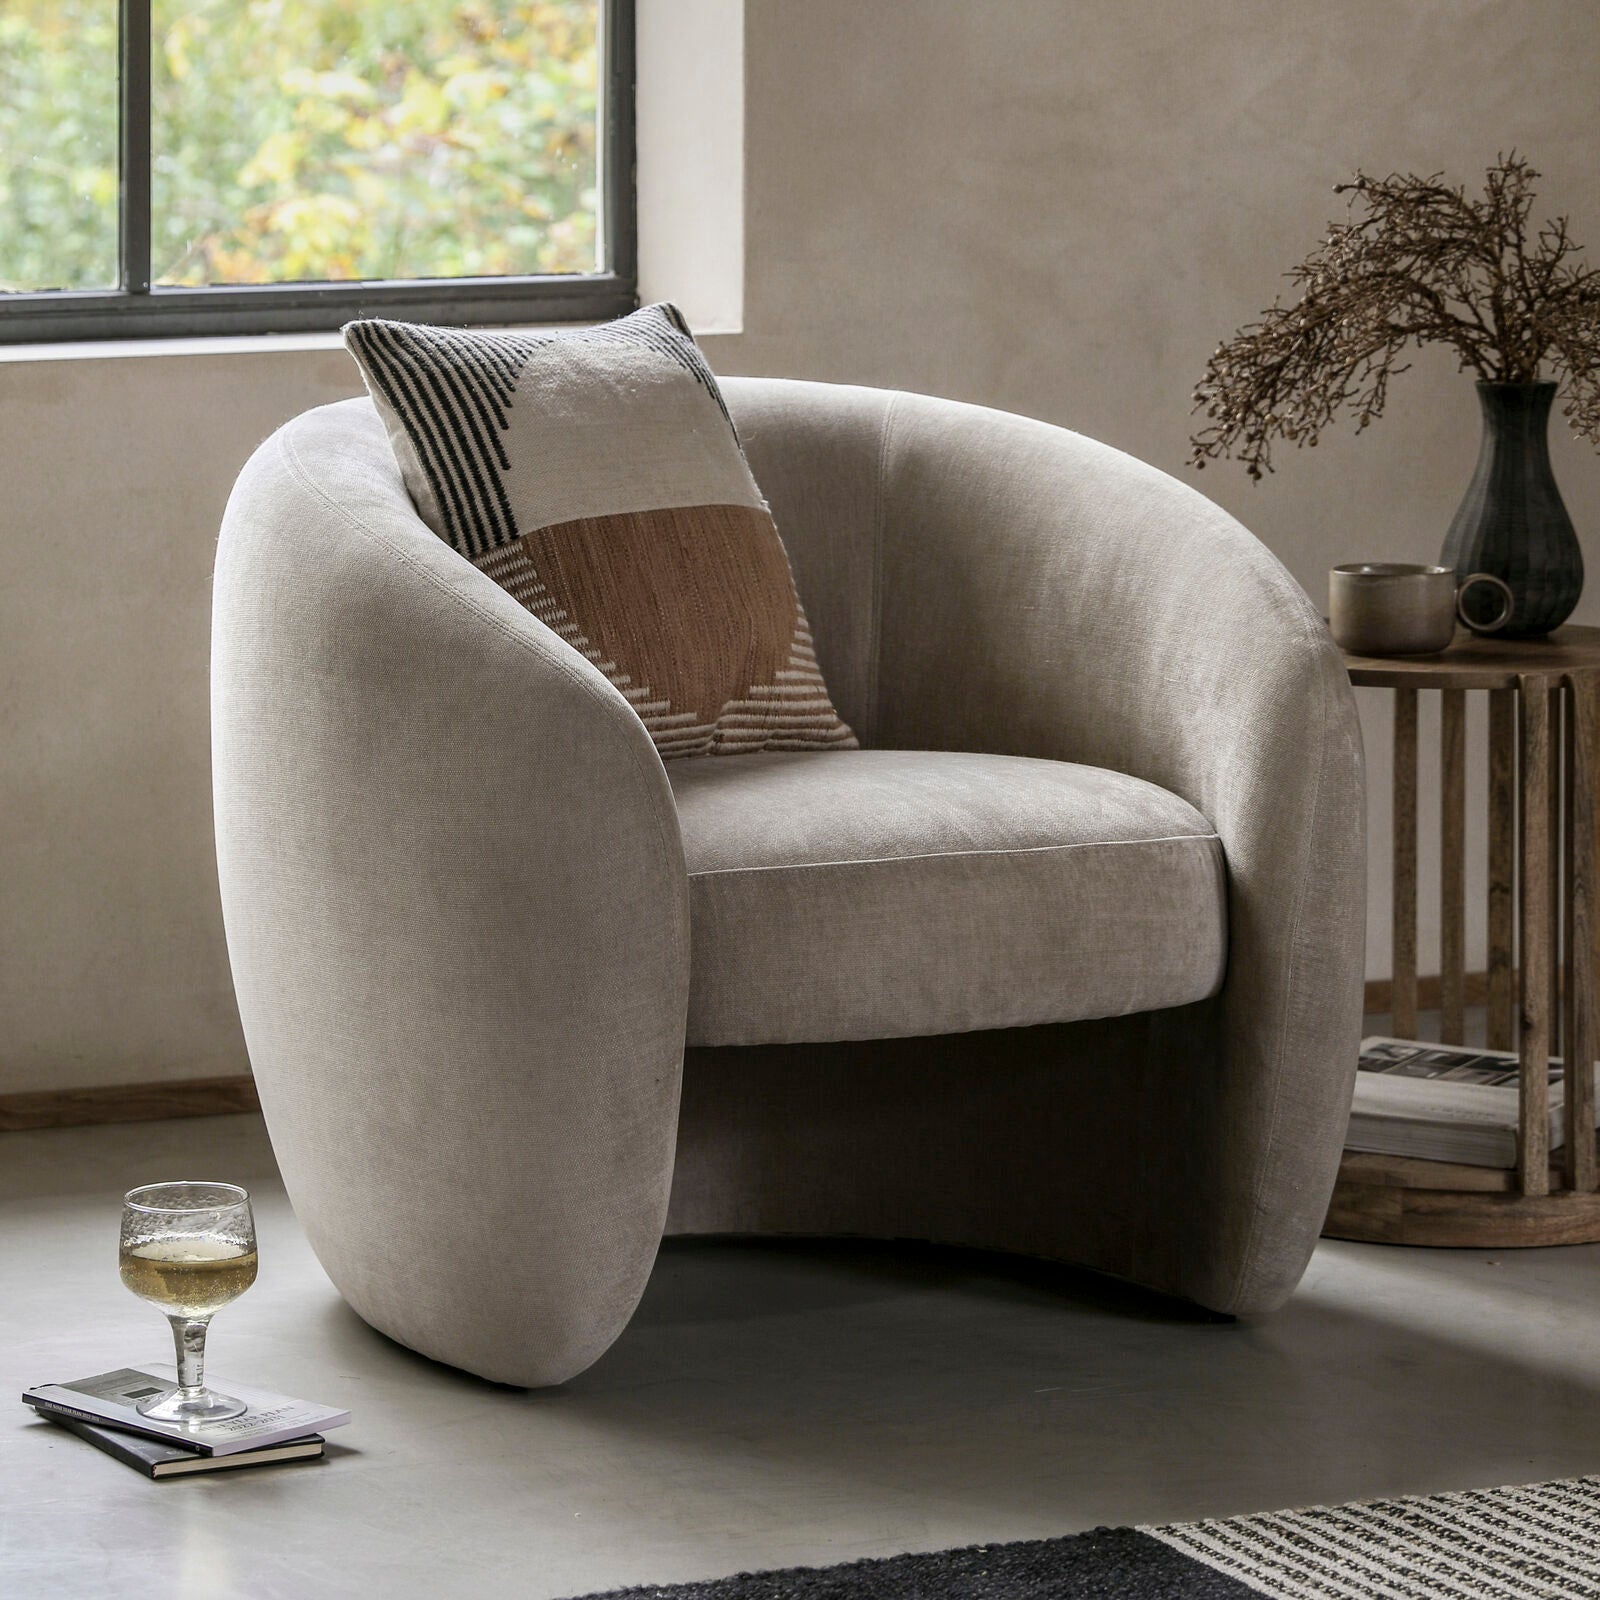 Barret 2 Seat Sofa in Heritage Green Leather compact sized mid-century style | MalletandPlane.com